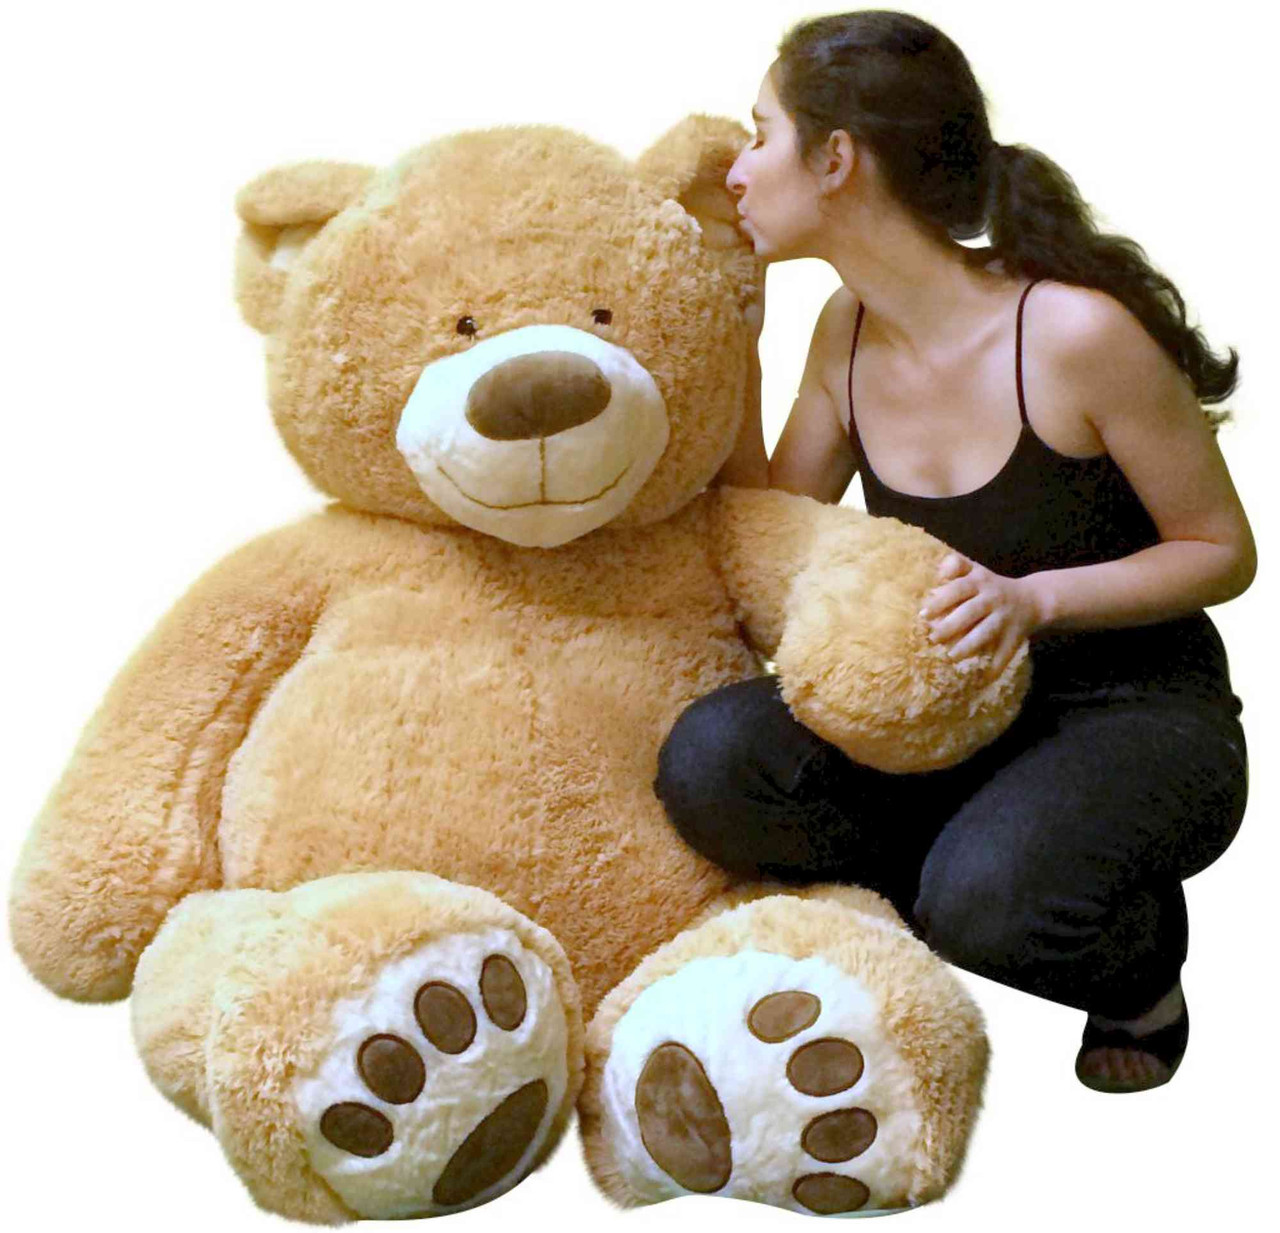 Giant Teddy Bear Large Stuffed Animals Plush Big Bear with Love